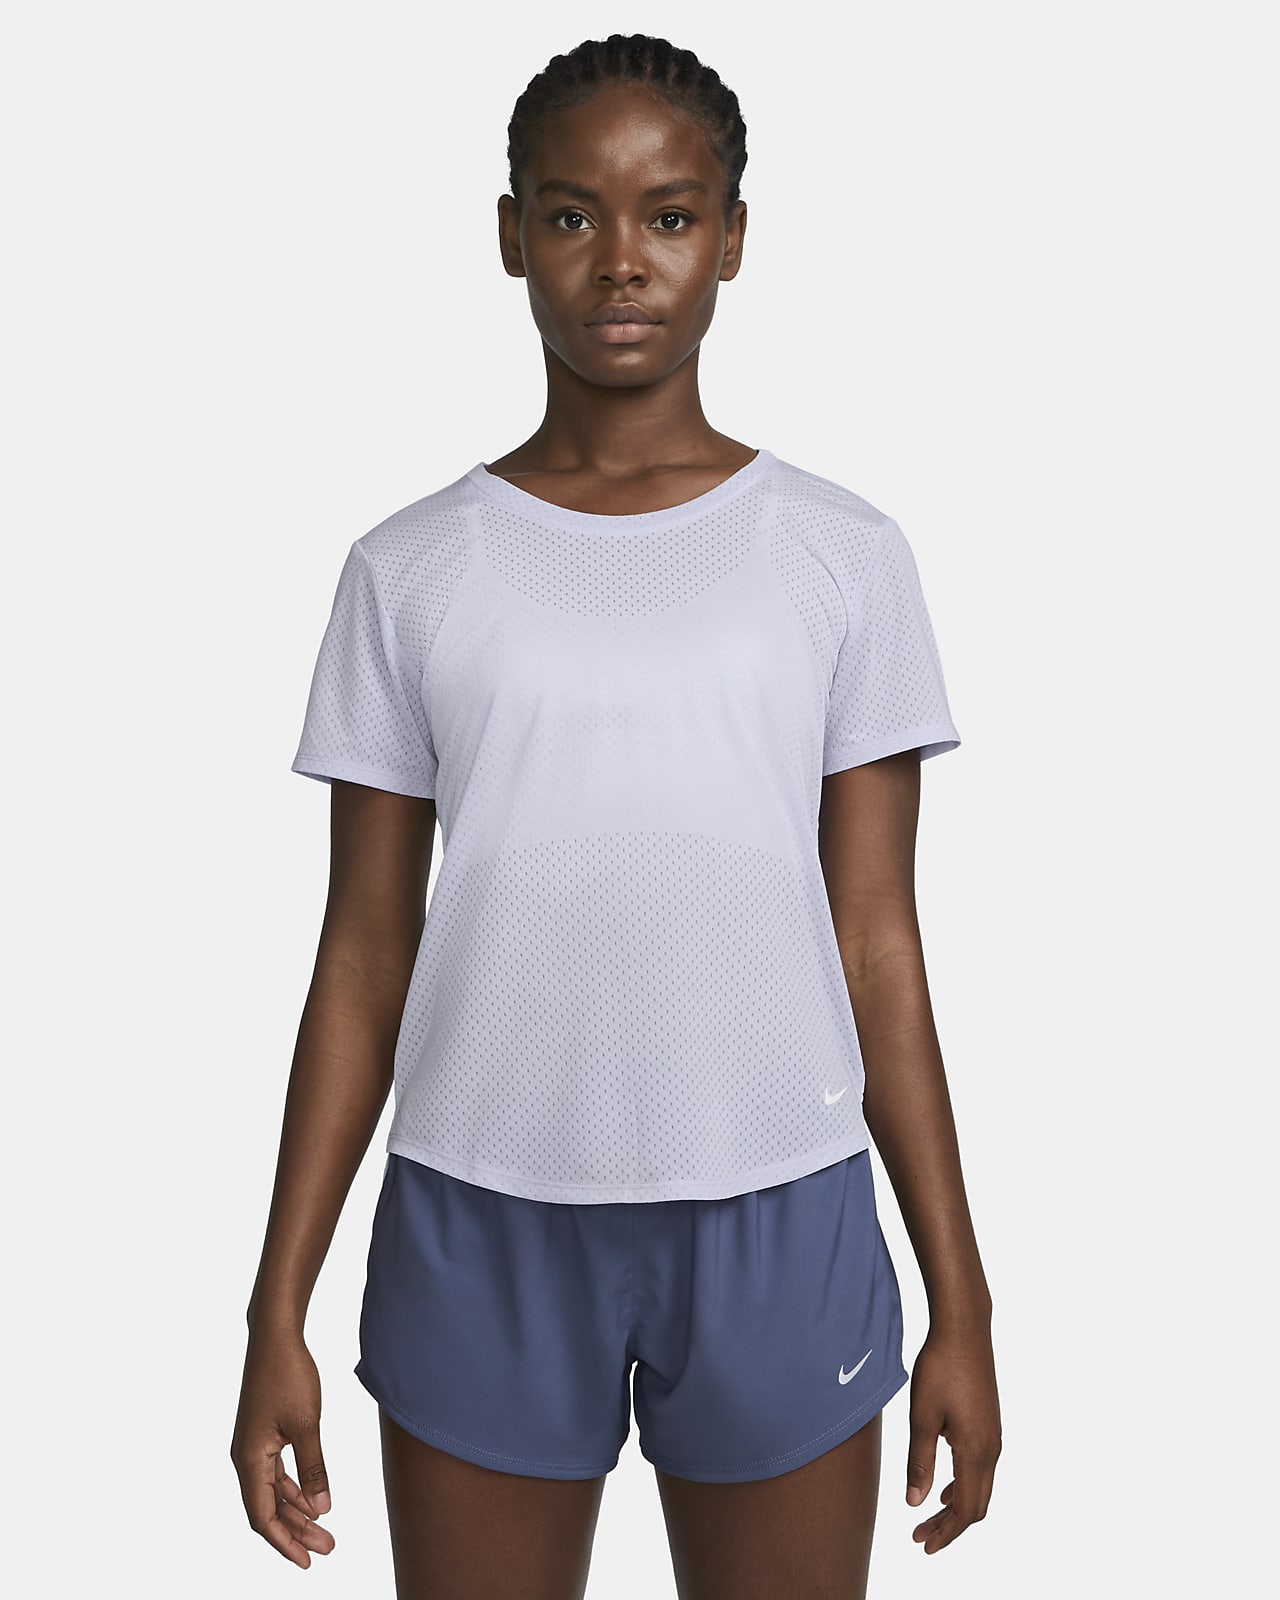 Dri-FIT One Breathe Women's Short-Sleeve Top. Nike LU